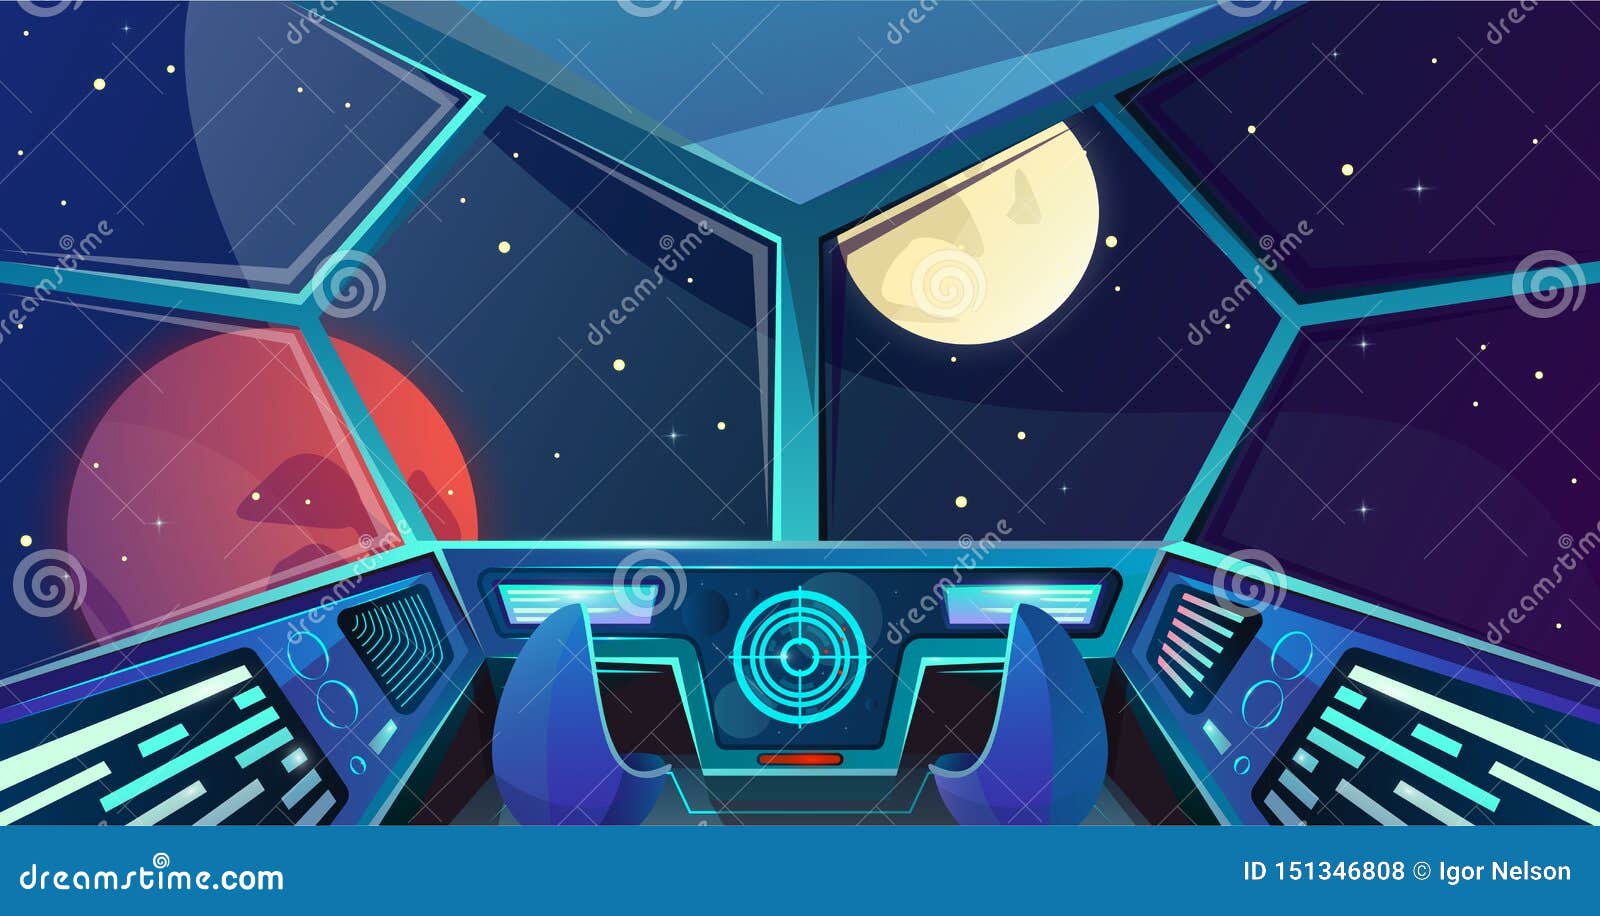 Spaceship Interior Of Captains Bridge With Chair In Cartoon